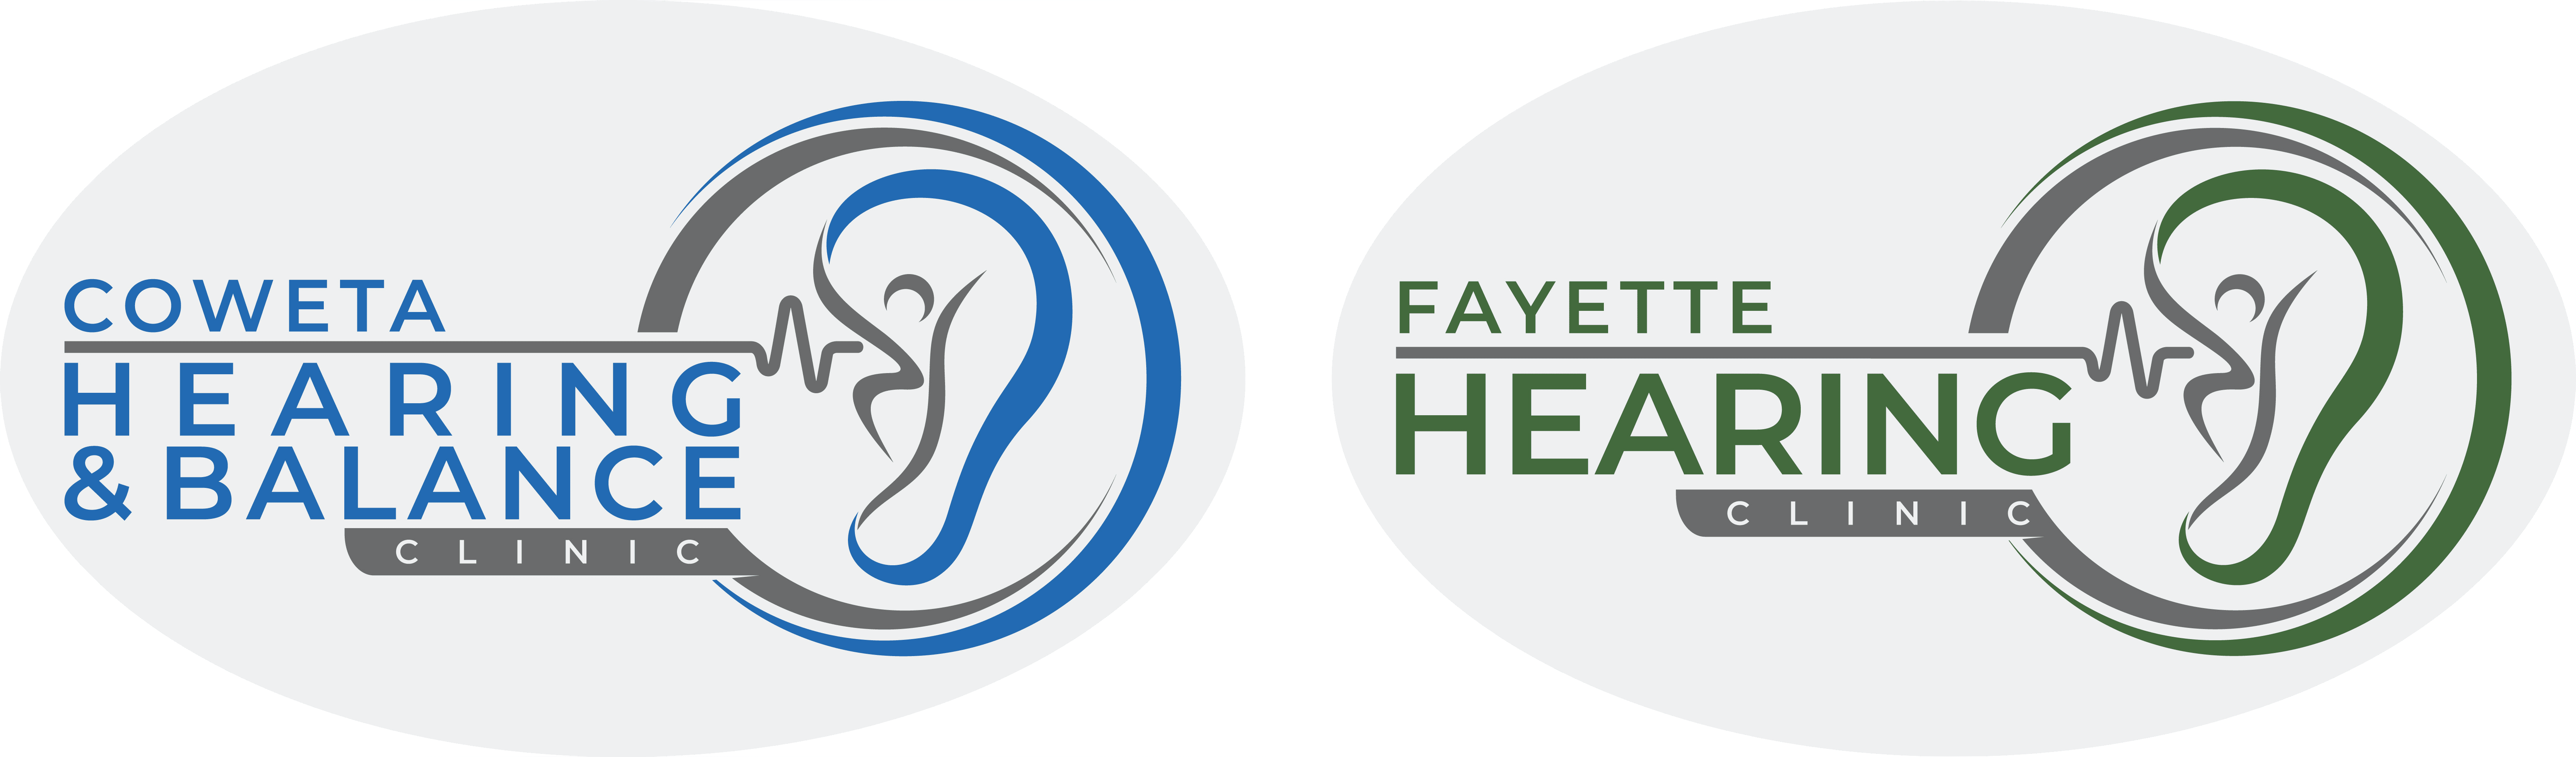 Coweta & Fayette Clinic Logos